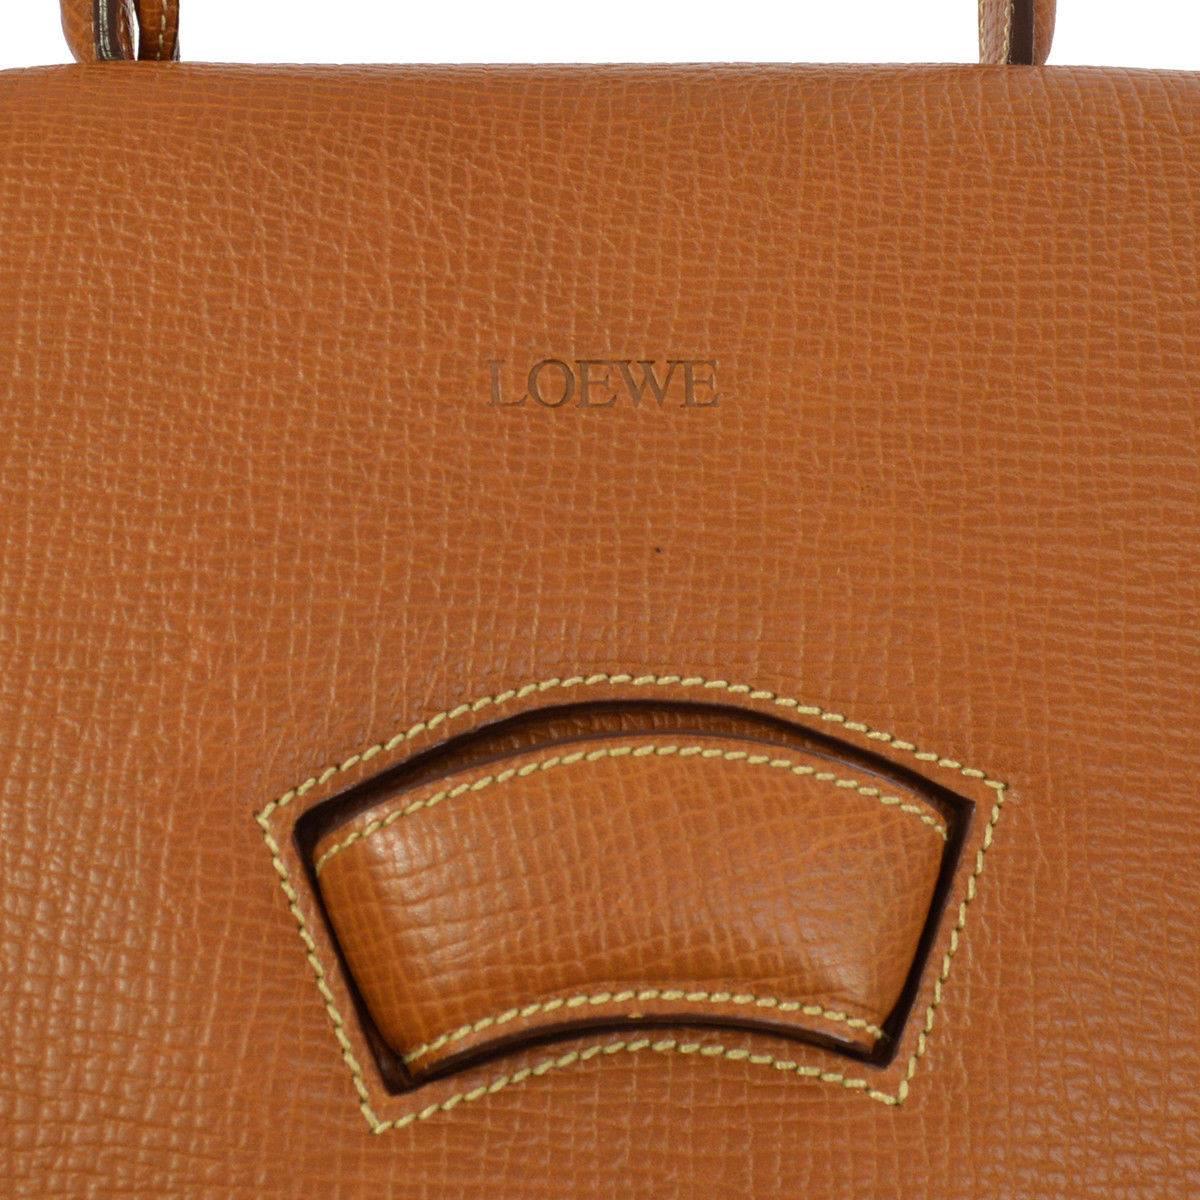 
Loewe Cognac Leather Evening Top Handle Satchel Shoulder Flap Bag
Leather
Suede lining
Made in Spain
Top Handle drop 4